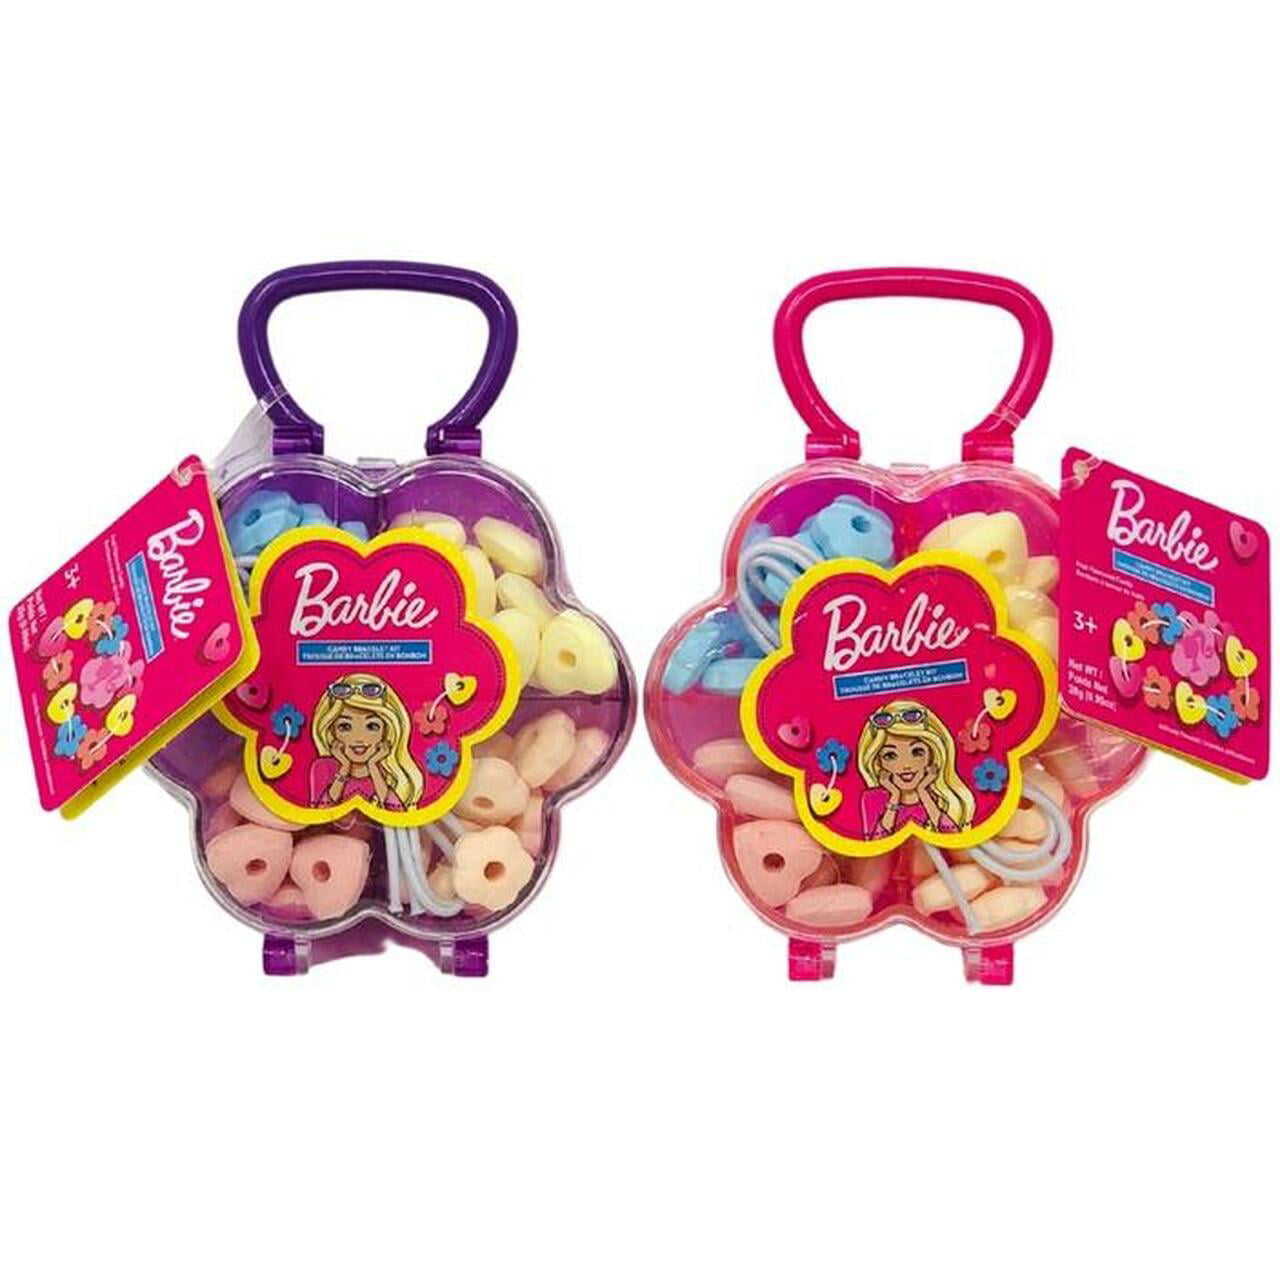 Sweet Beads Candy Bracelet Box - 12CT • Kids Candy Shoppe • Bulk